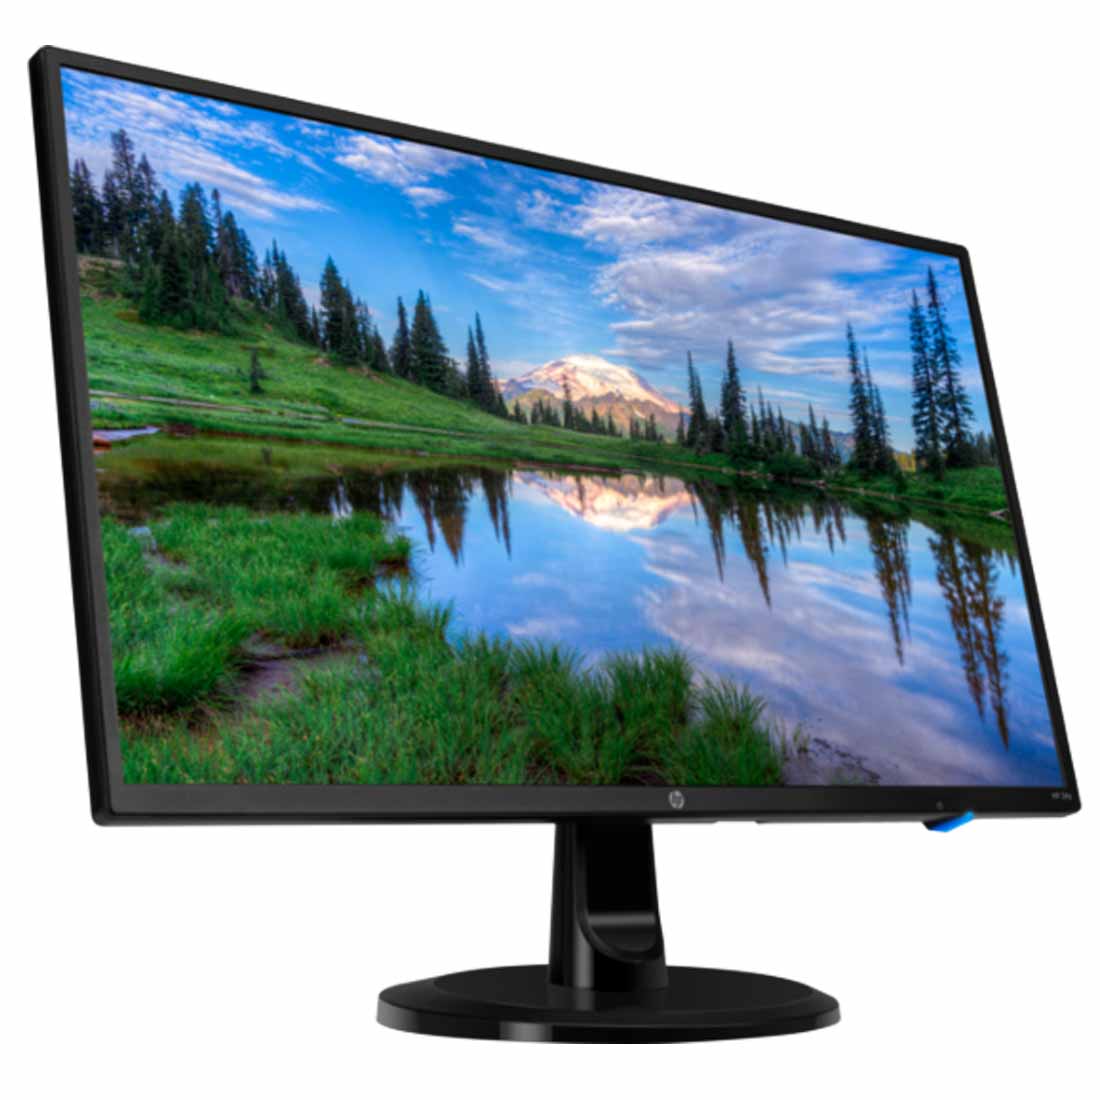 HP 23.8 inch Full HD Computer Monitor with FHD Anti-Glare Anti-Static and Vesa Mount